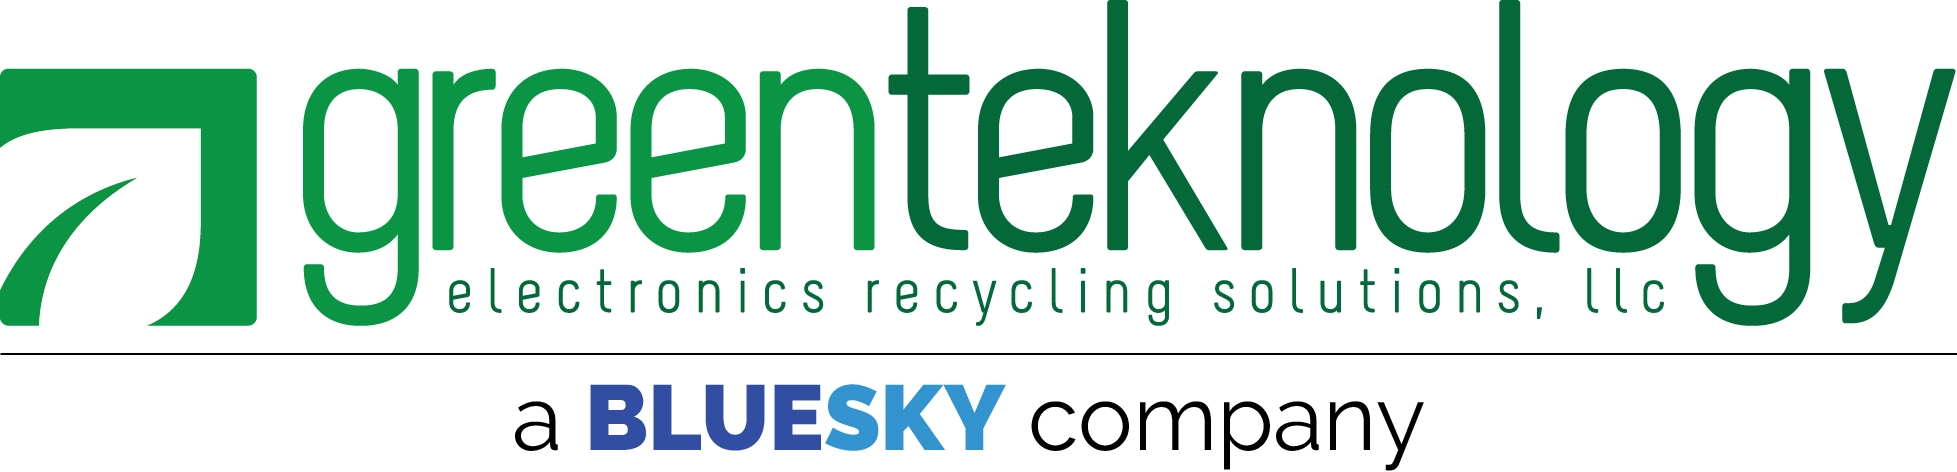 Greentek Recycling 